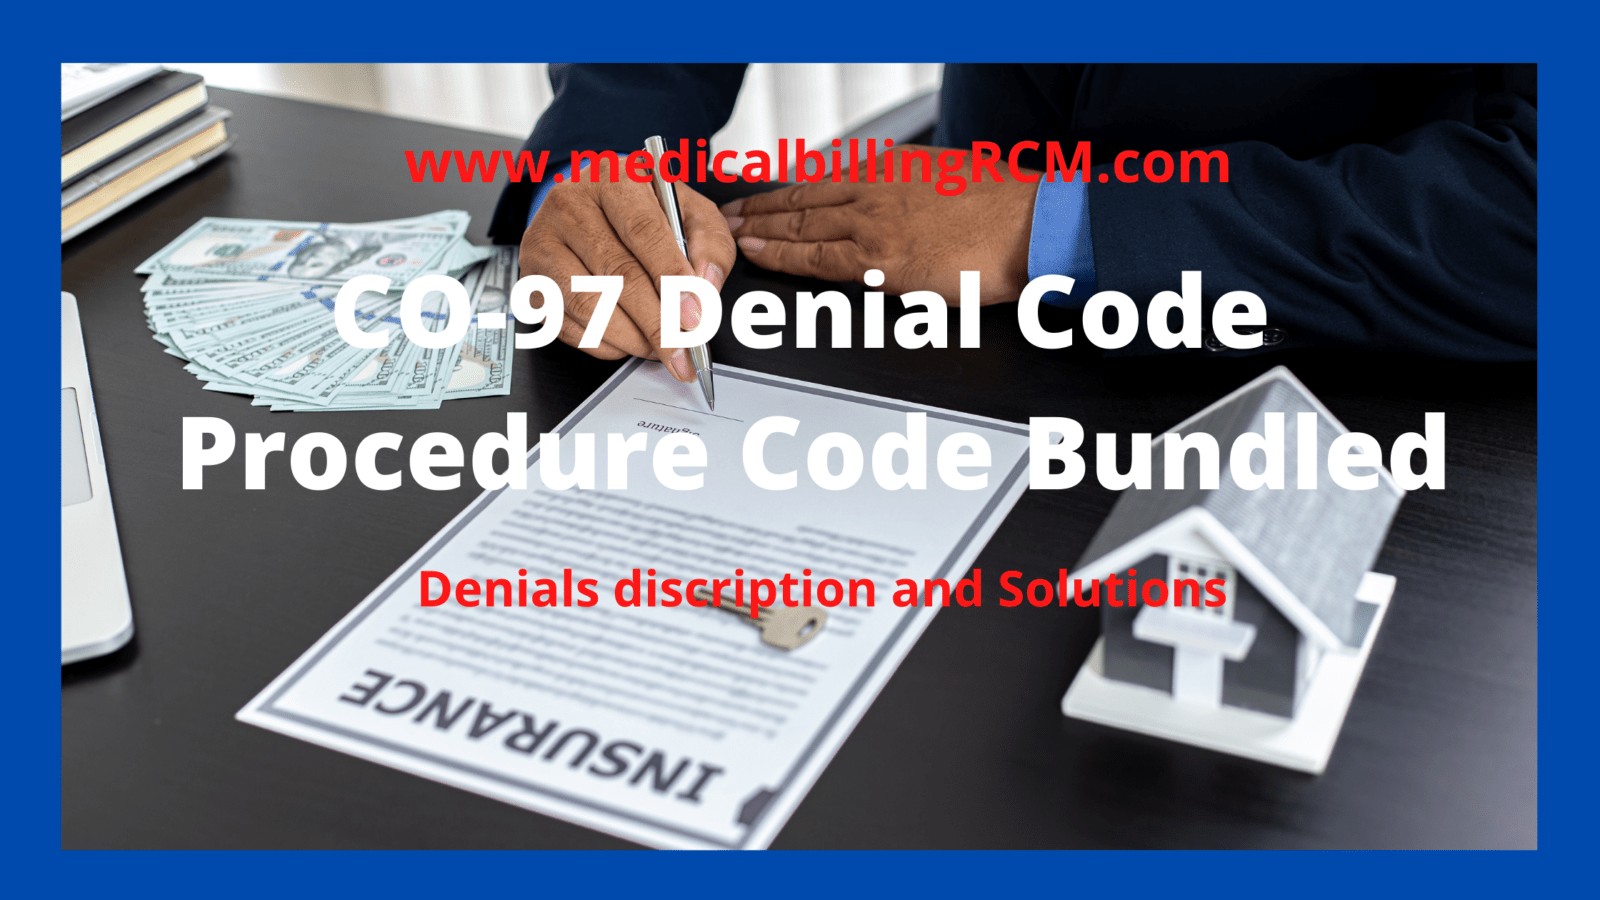 co 97 denial code in medical billing